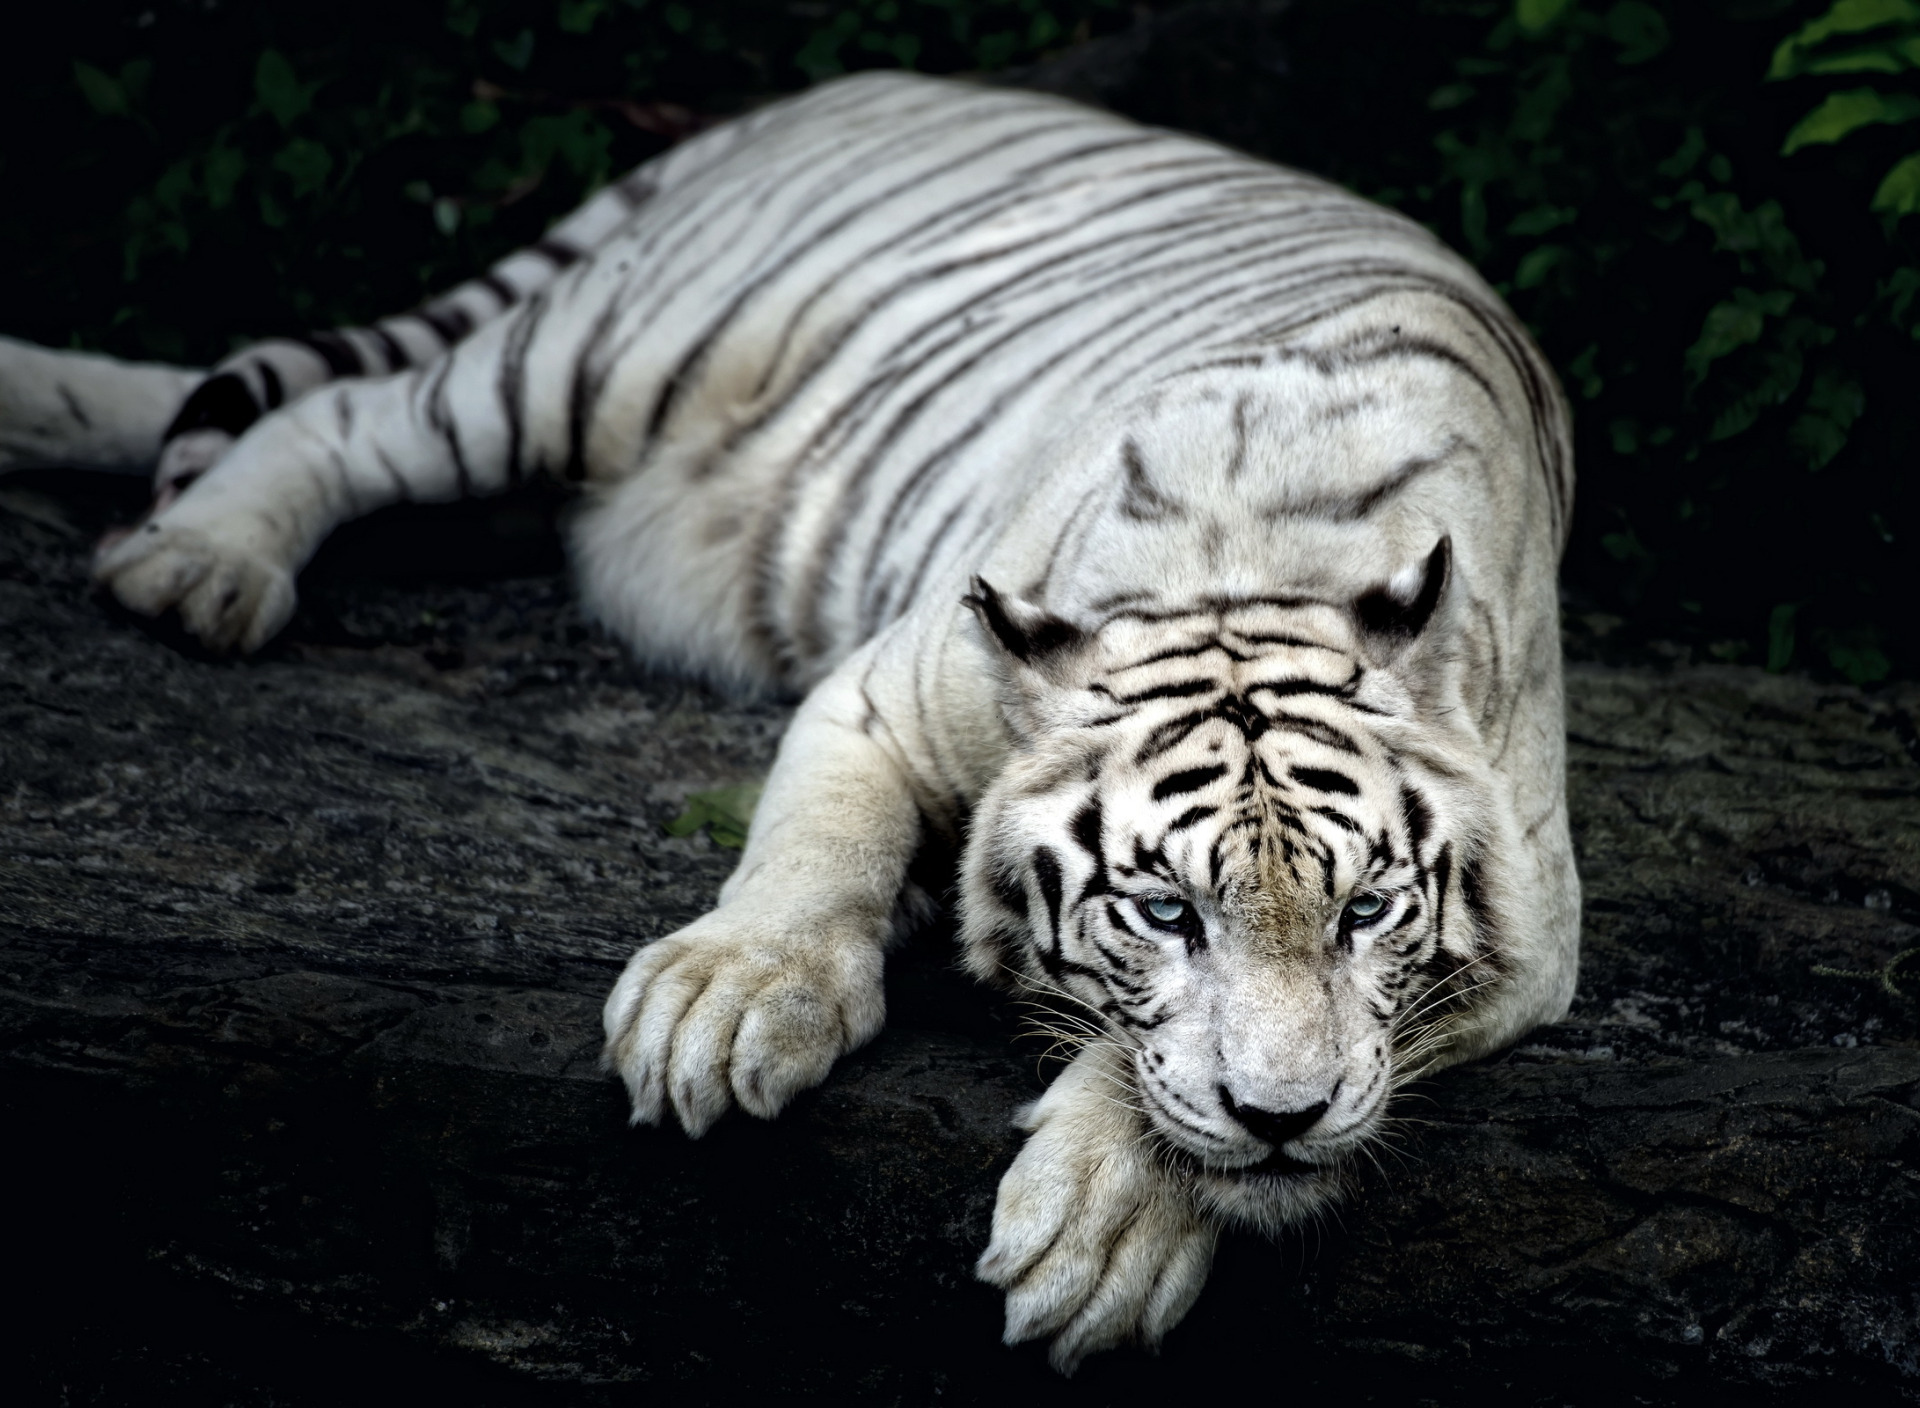 Animal themes. Суматранский тигр альбинос. Бенгальский тигр альбинос. Амурский тигр белый. Фото белого тигра.